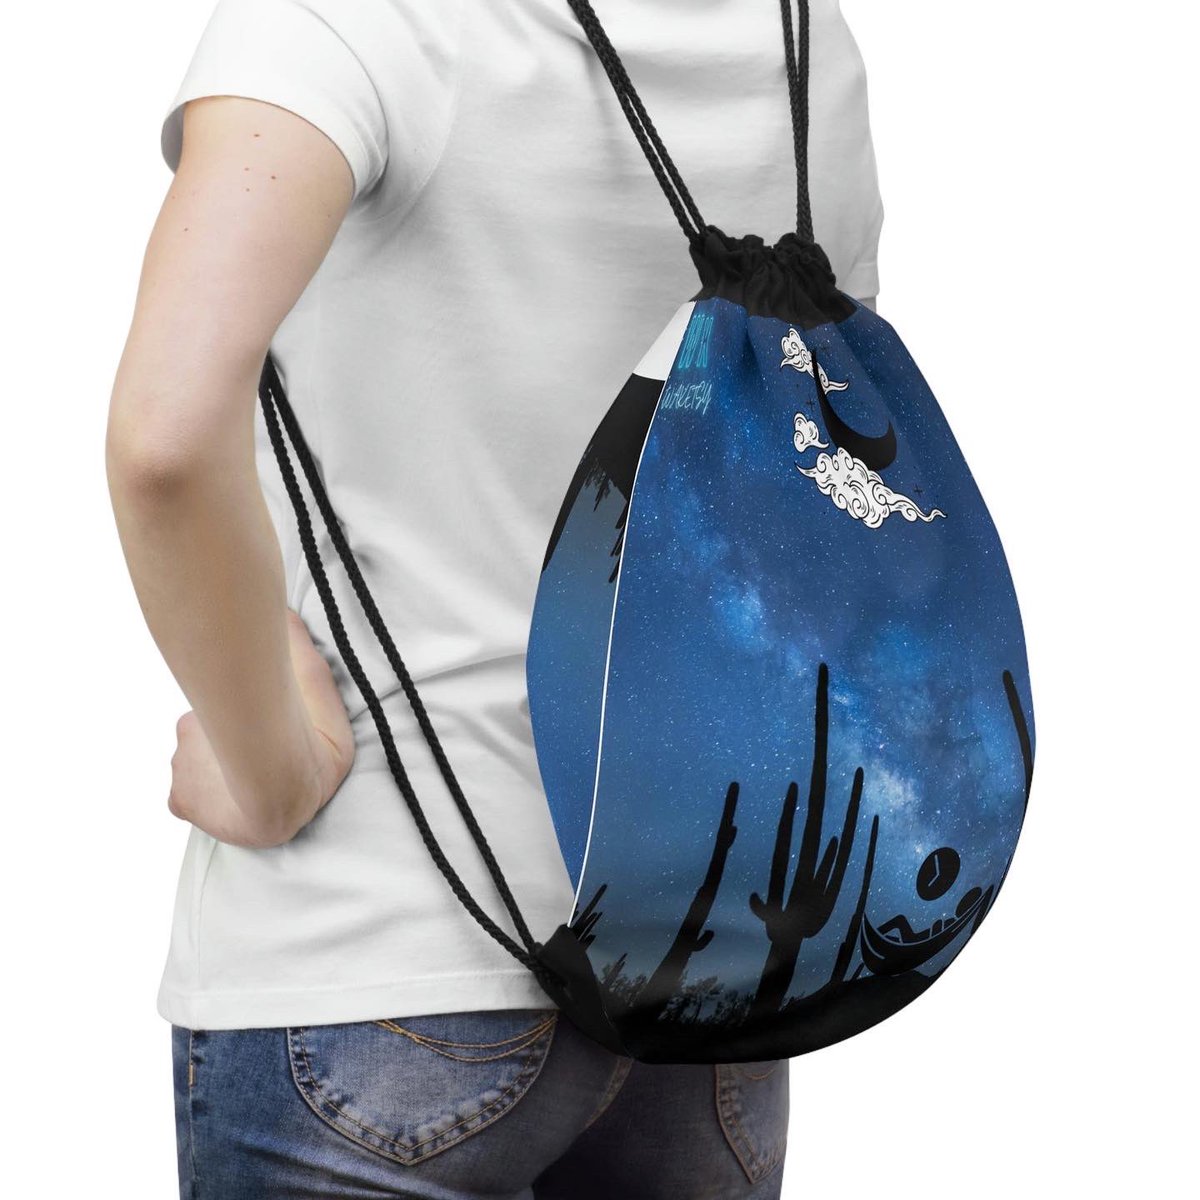 Waketsy drawstring bag.
.
Waketsy.com
.
.
#fyp #fypシ #design #bag #backpack #travel #travelaccessories #shopsmall #shop #shopping #onlineshopping